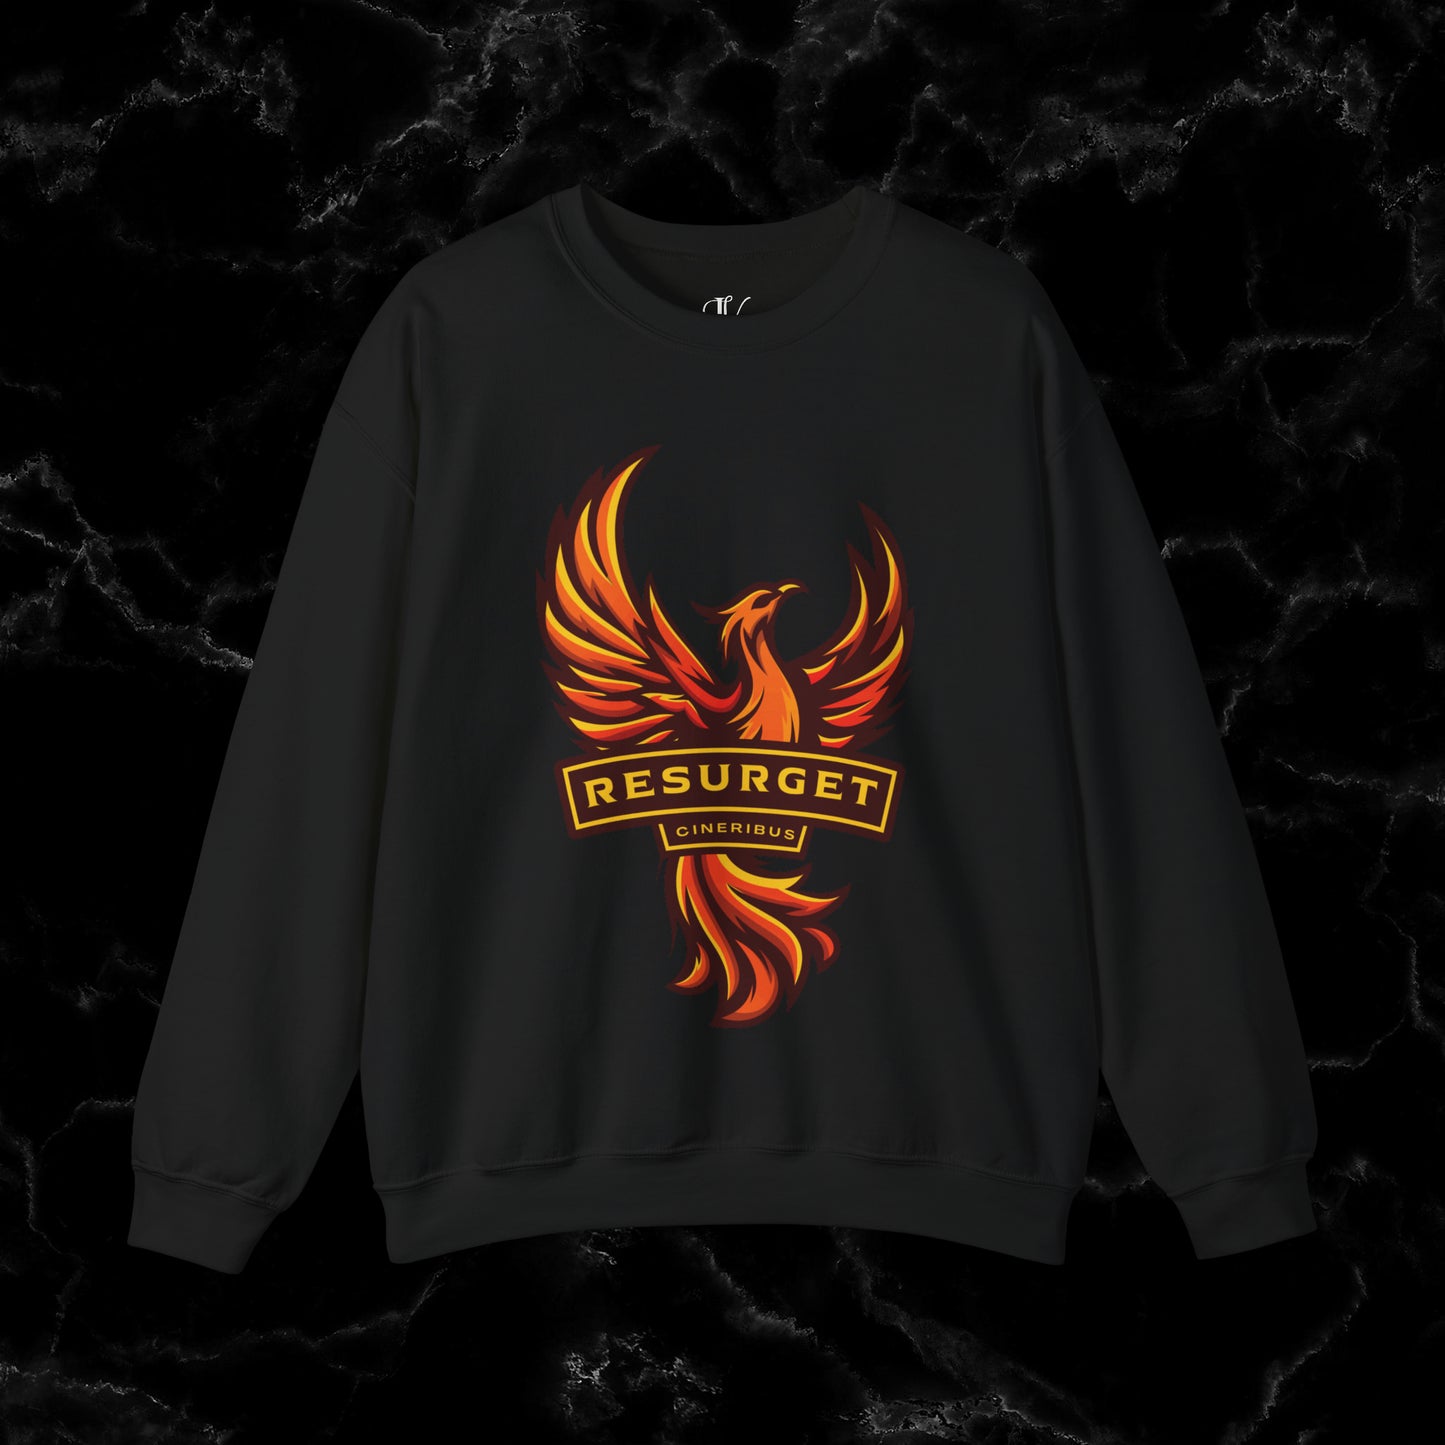 Resurget Cineribus Unisex Crewneck Sweatshirt - Latin Inspirational Gifts for Sports Football Fans Sweatshirt S Black 